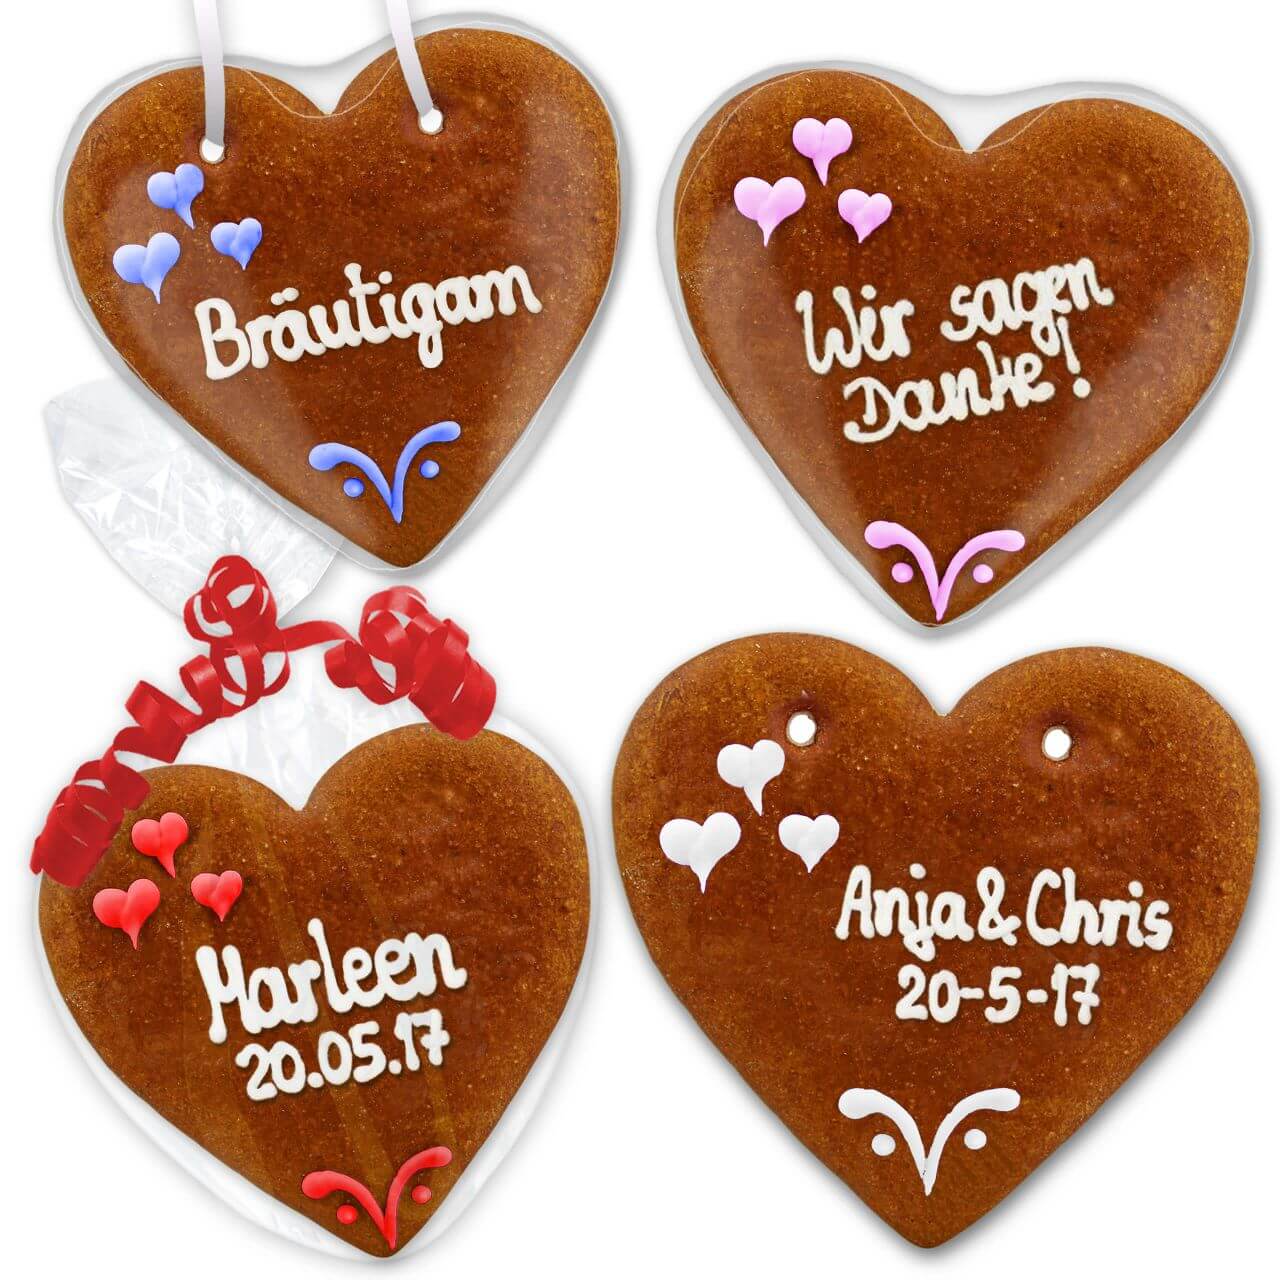 Save The Date Invitation Set Benjamin gingerbread heart 16cm